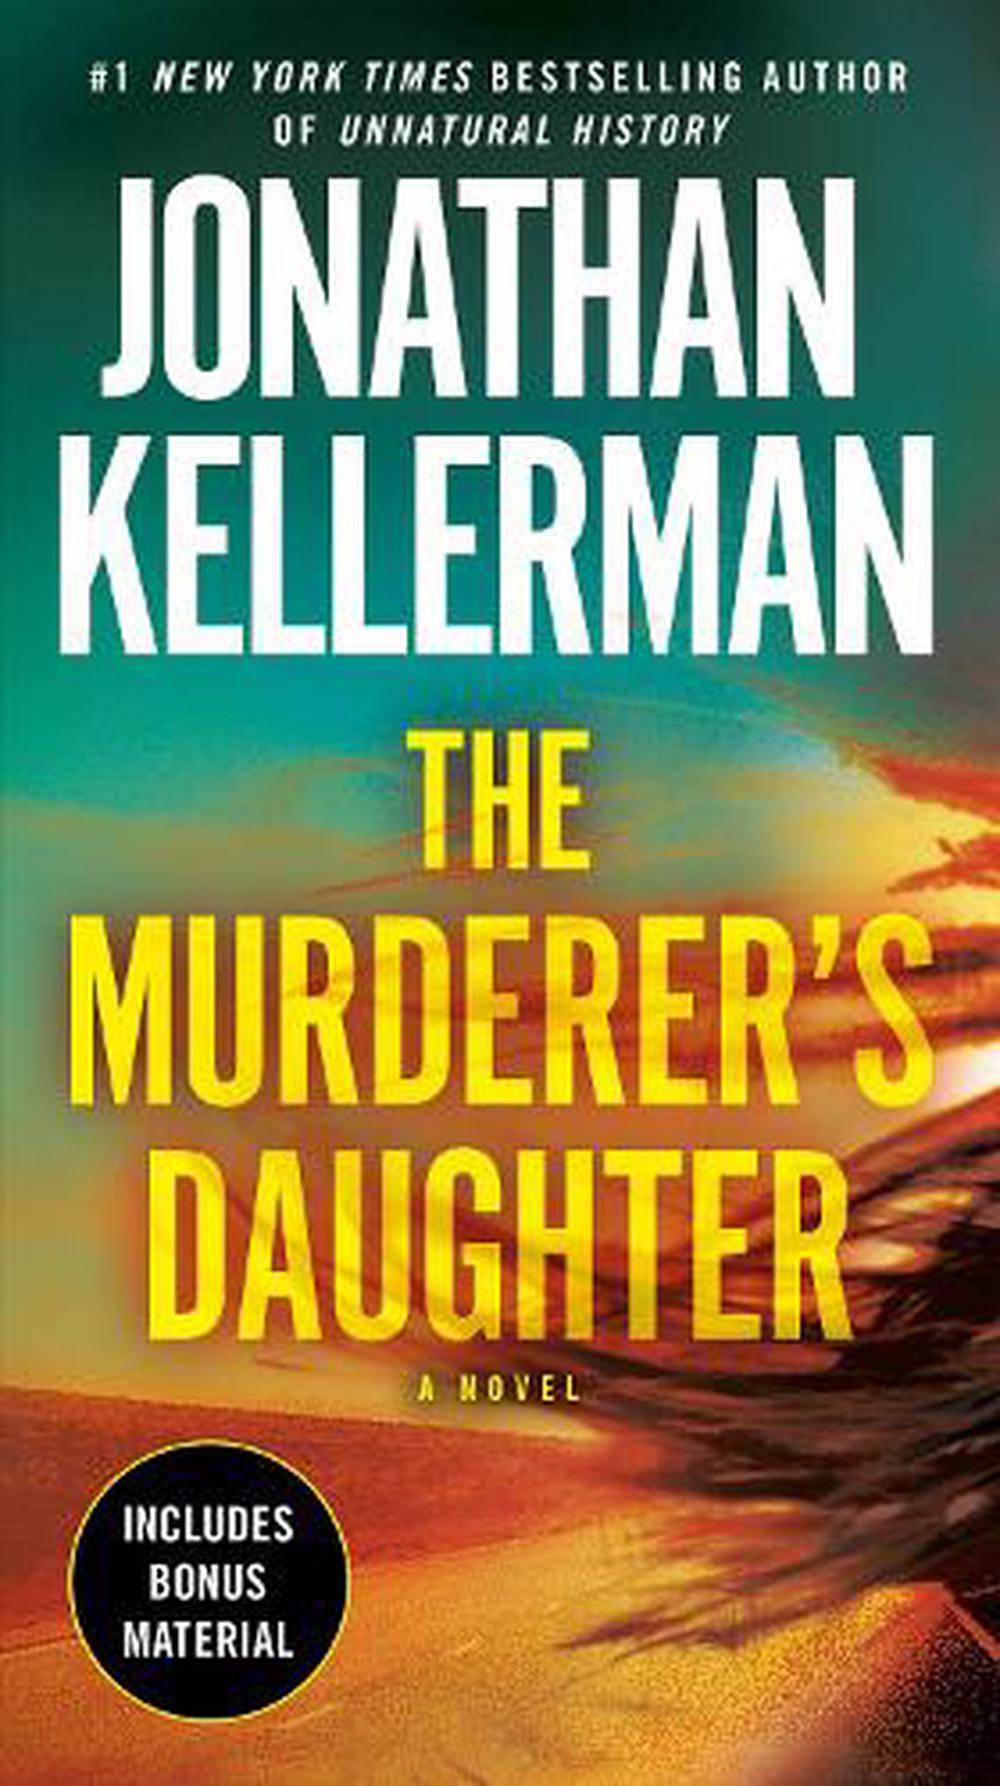 The Murderer's Daughter A Novel by Jonathan Kellerman (English